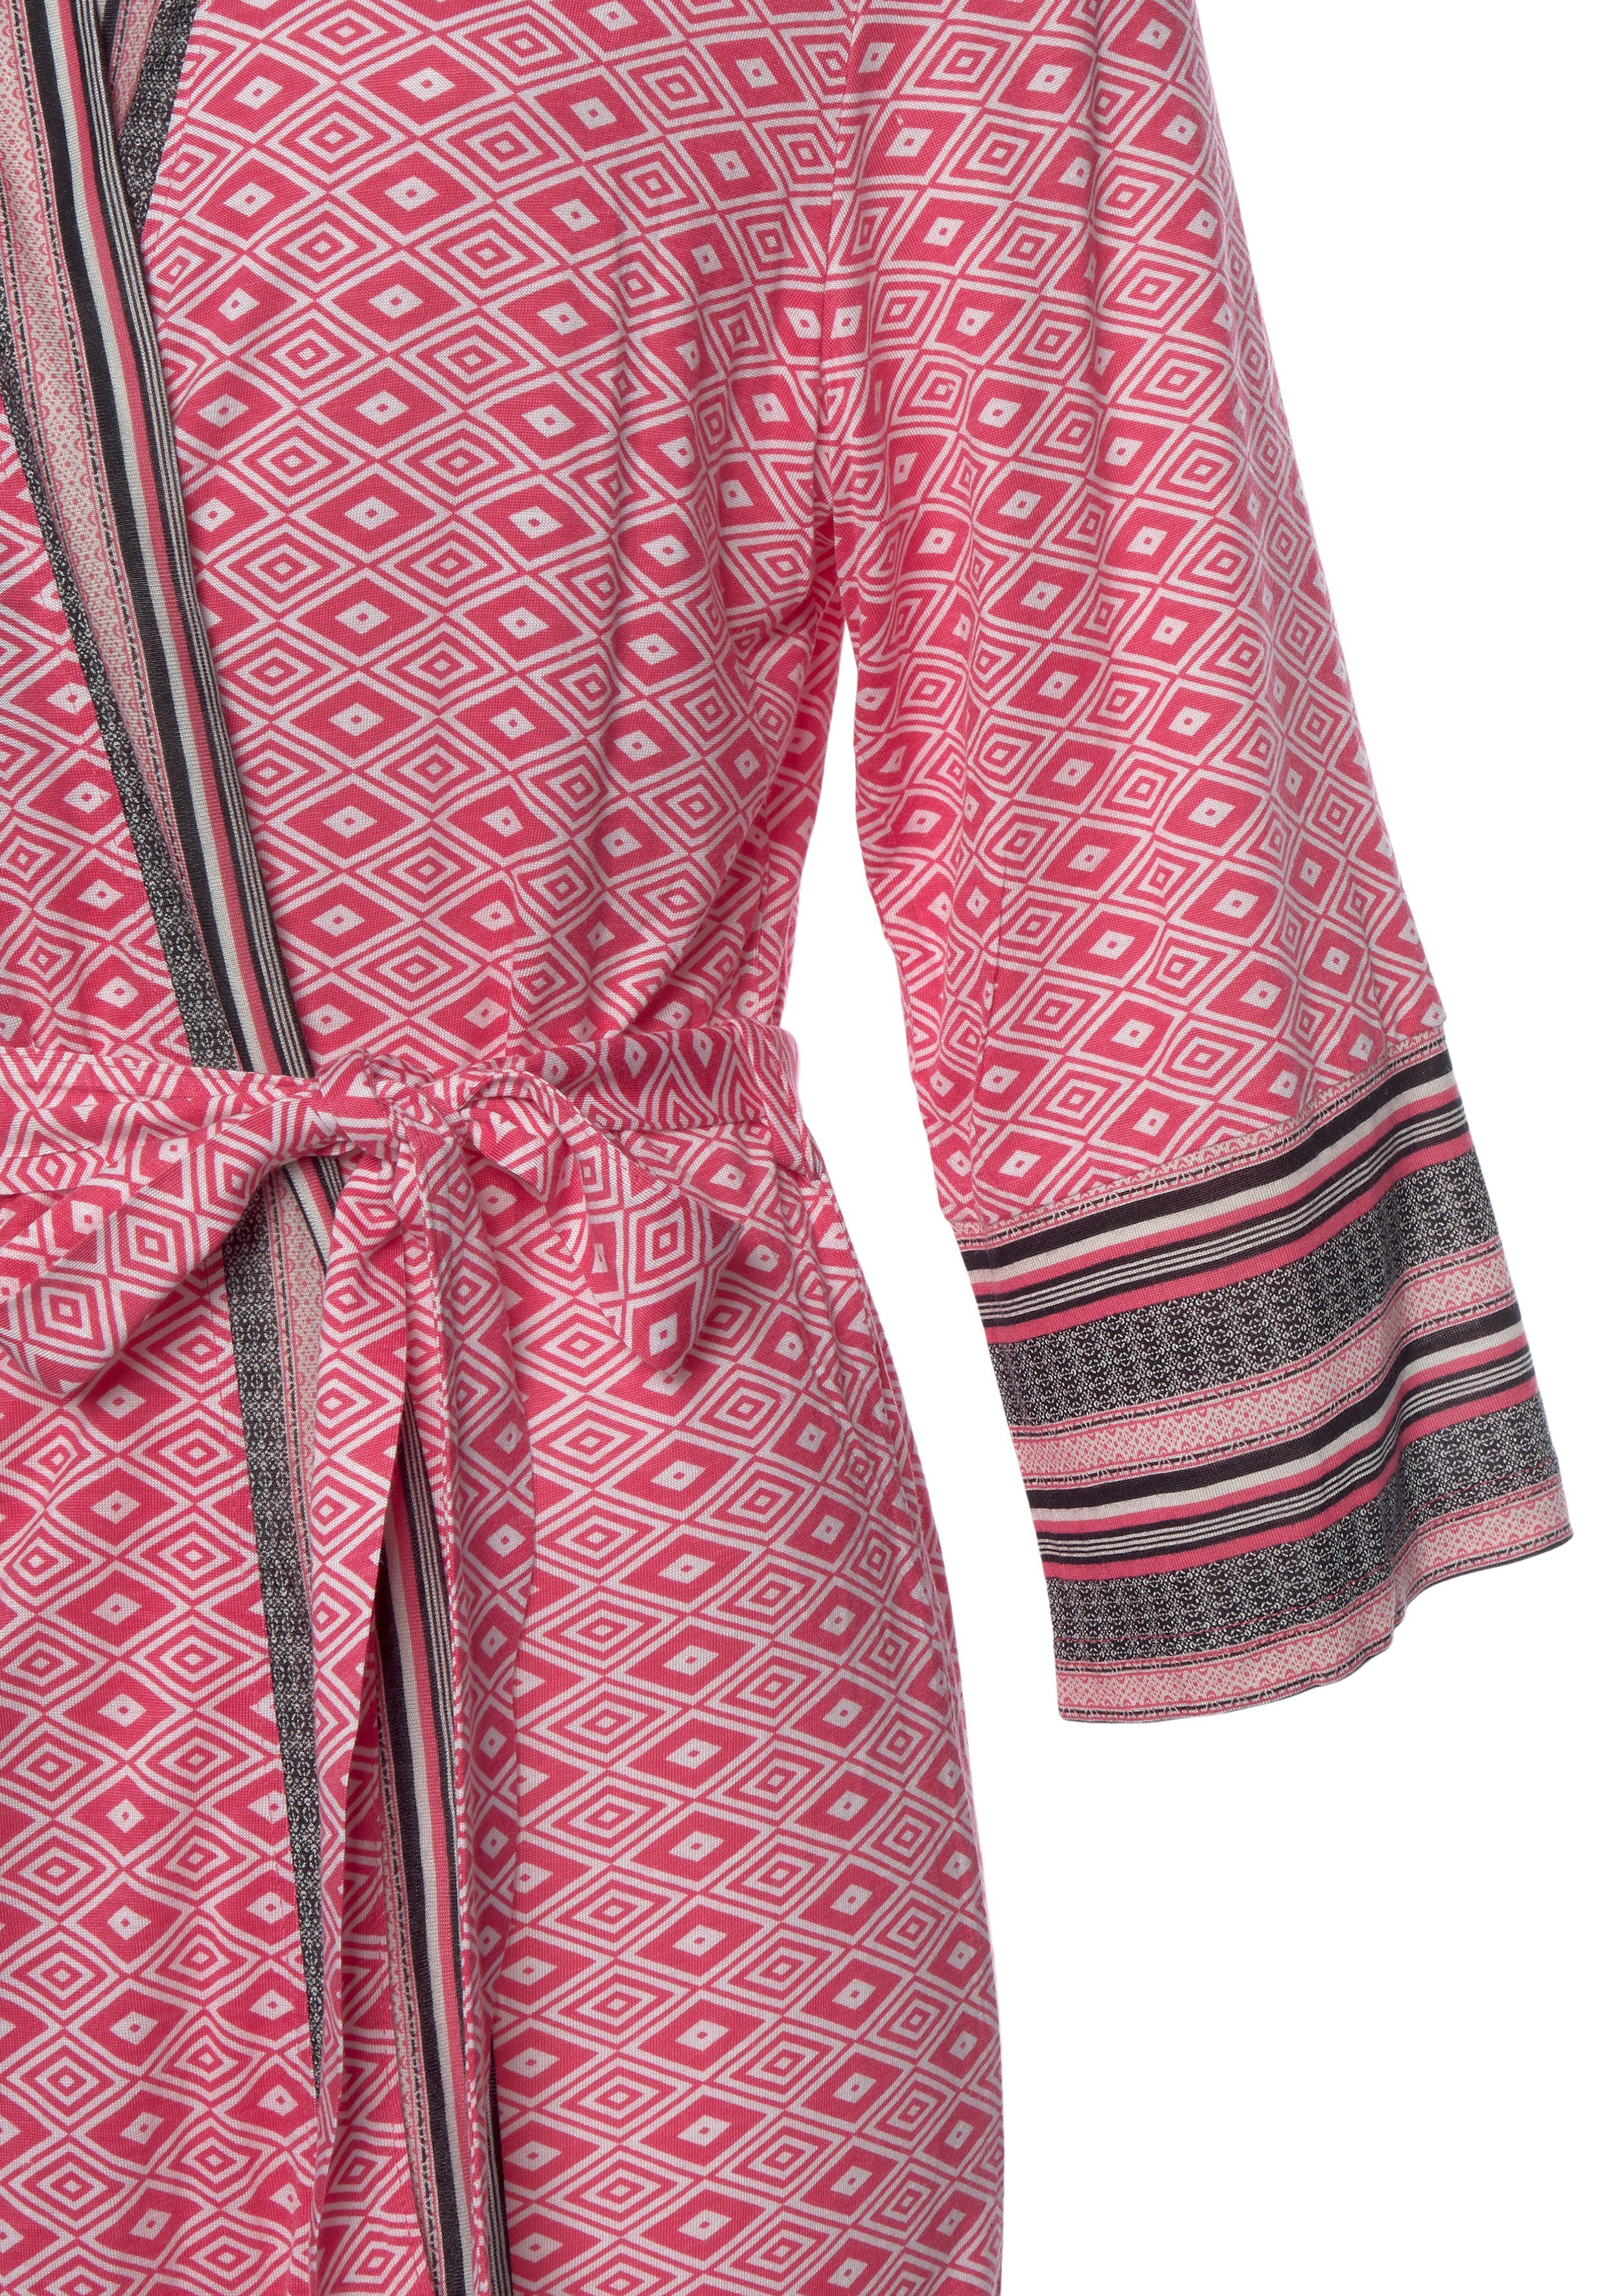 Kurzform, Kimono-Kragen, Vivance Gürtel, Single-Jersey, in Dreams gemustert pink Ethno-Design schönem Kimono,